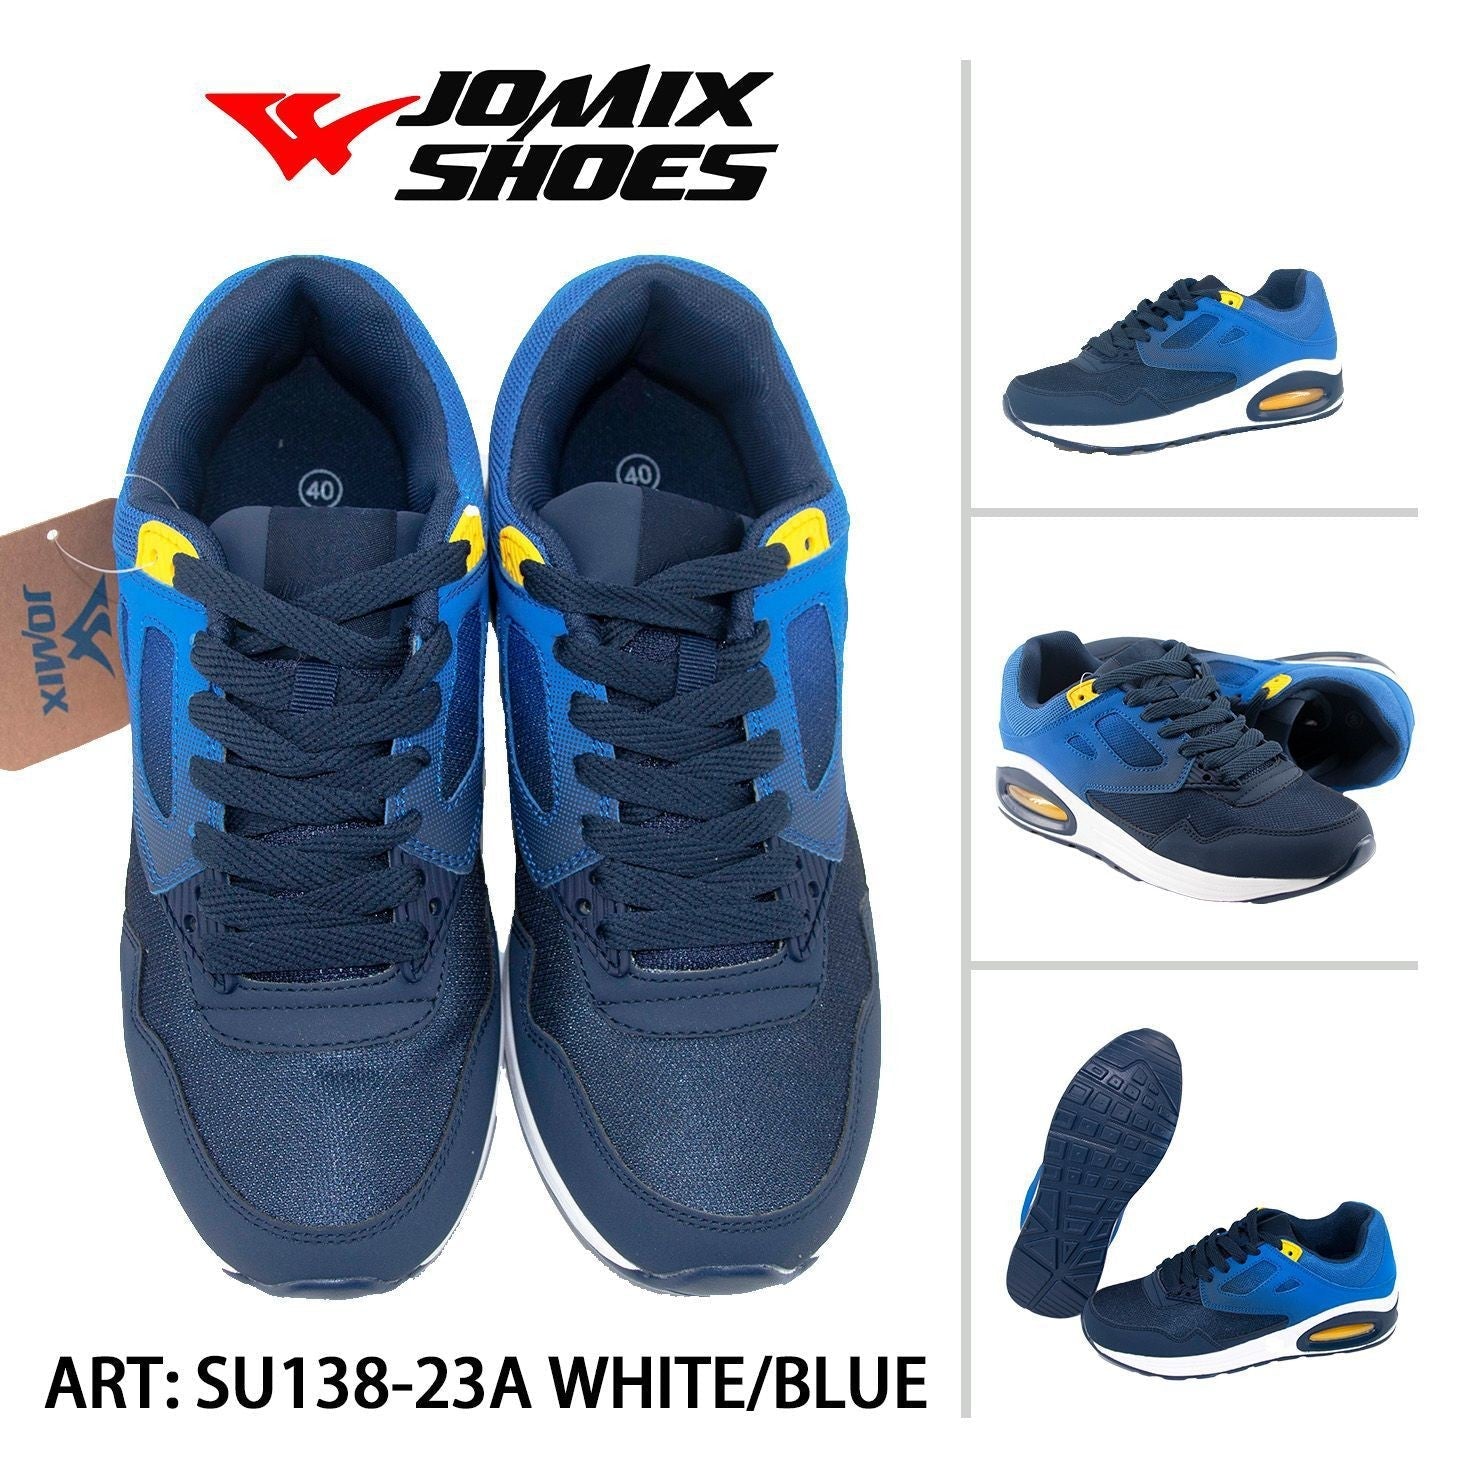 Sneakers da uomo sportive casual Jomix Shoes SU138-23A